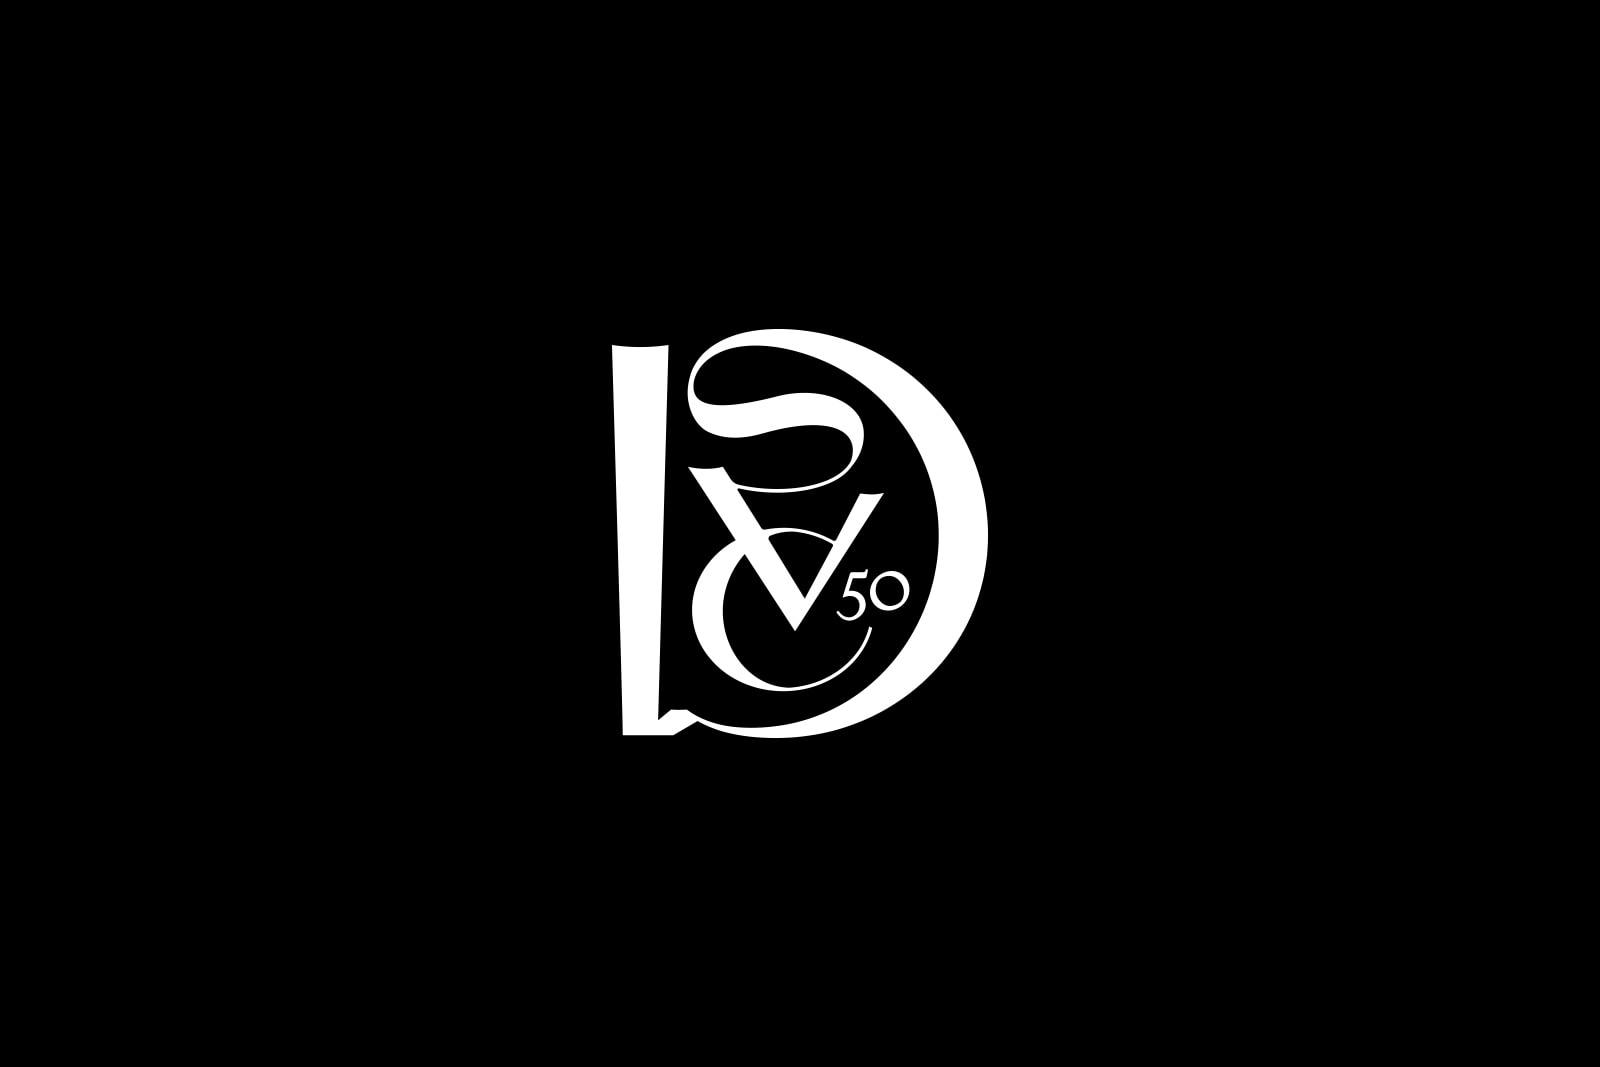 White DSVC 50 logo on a black background